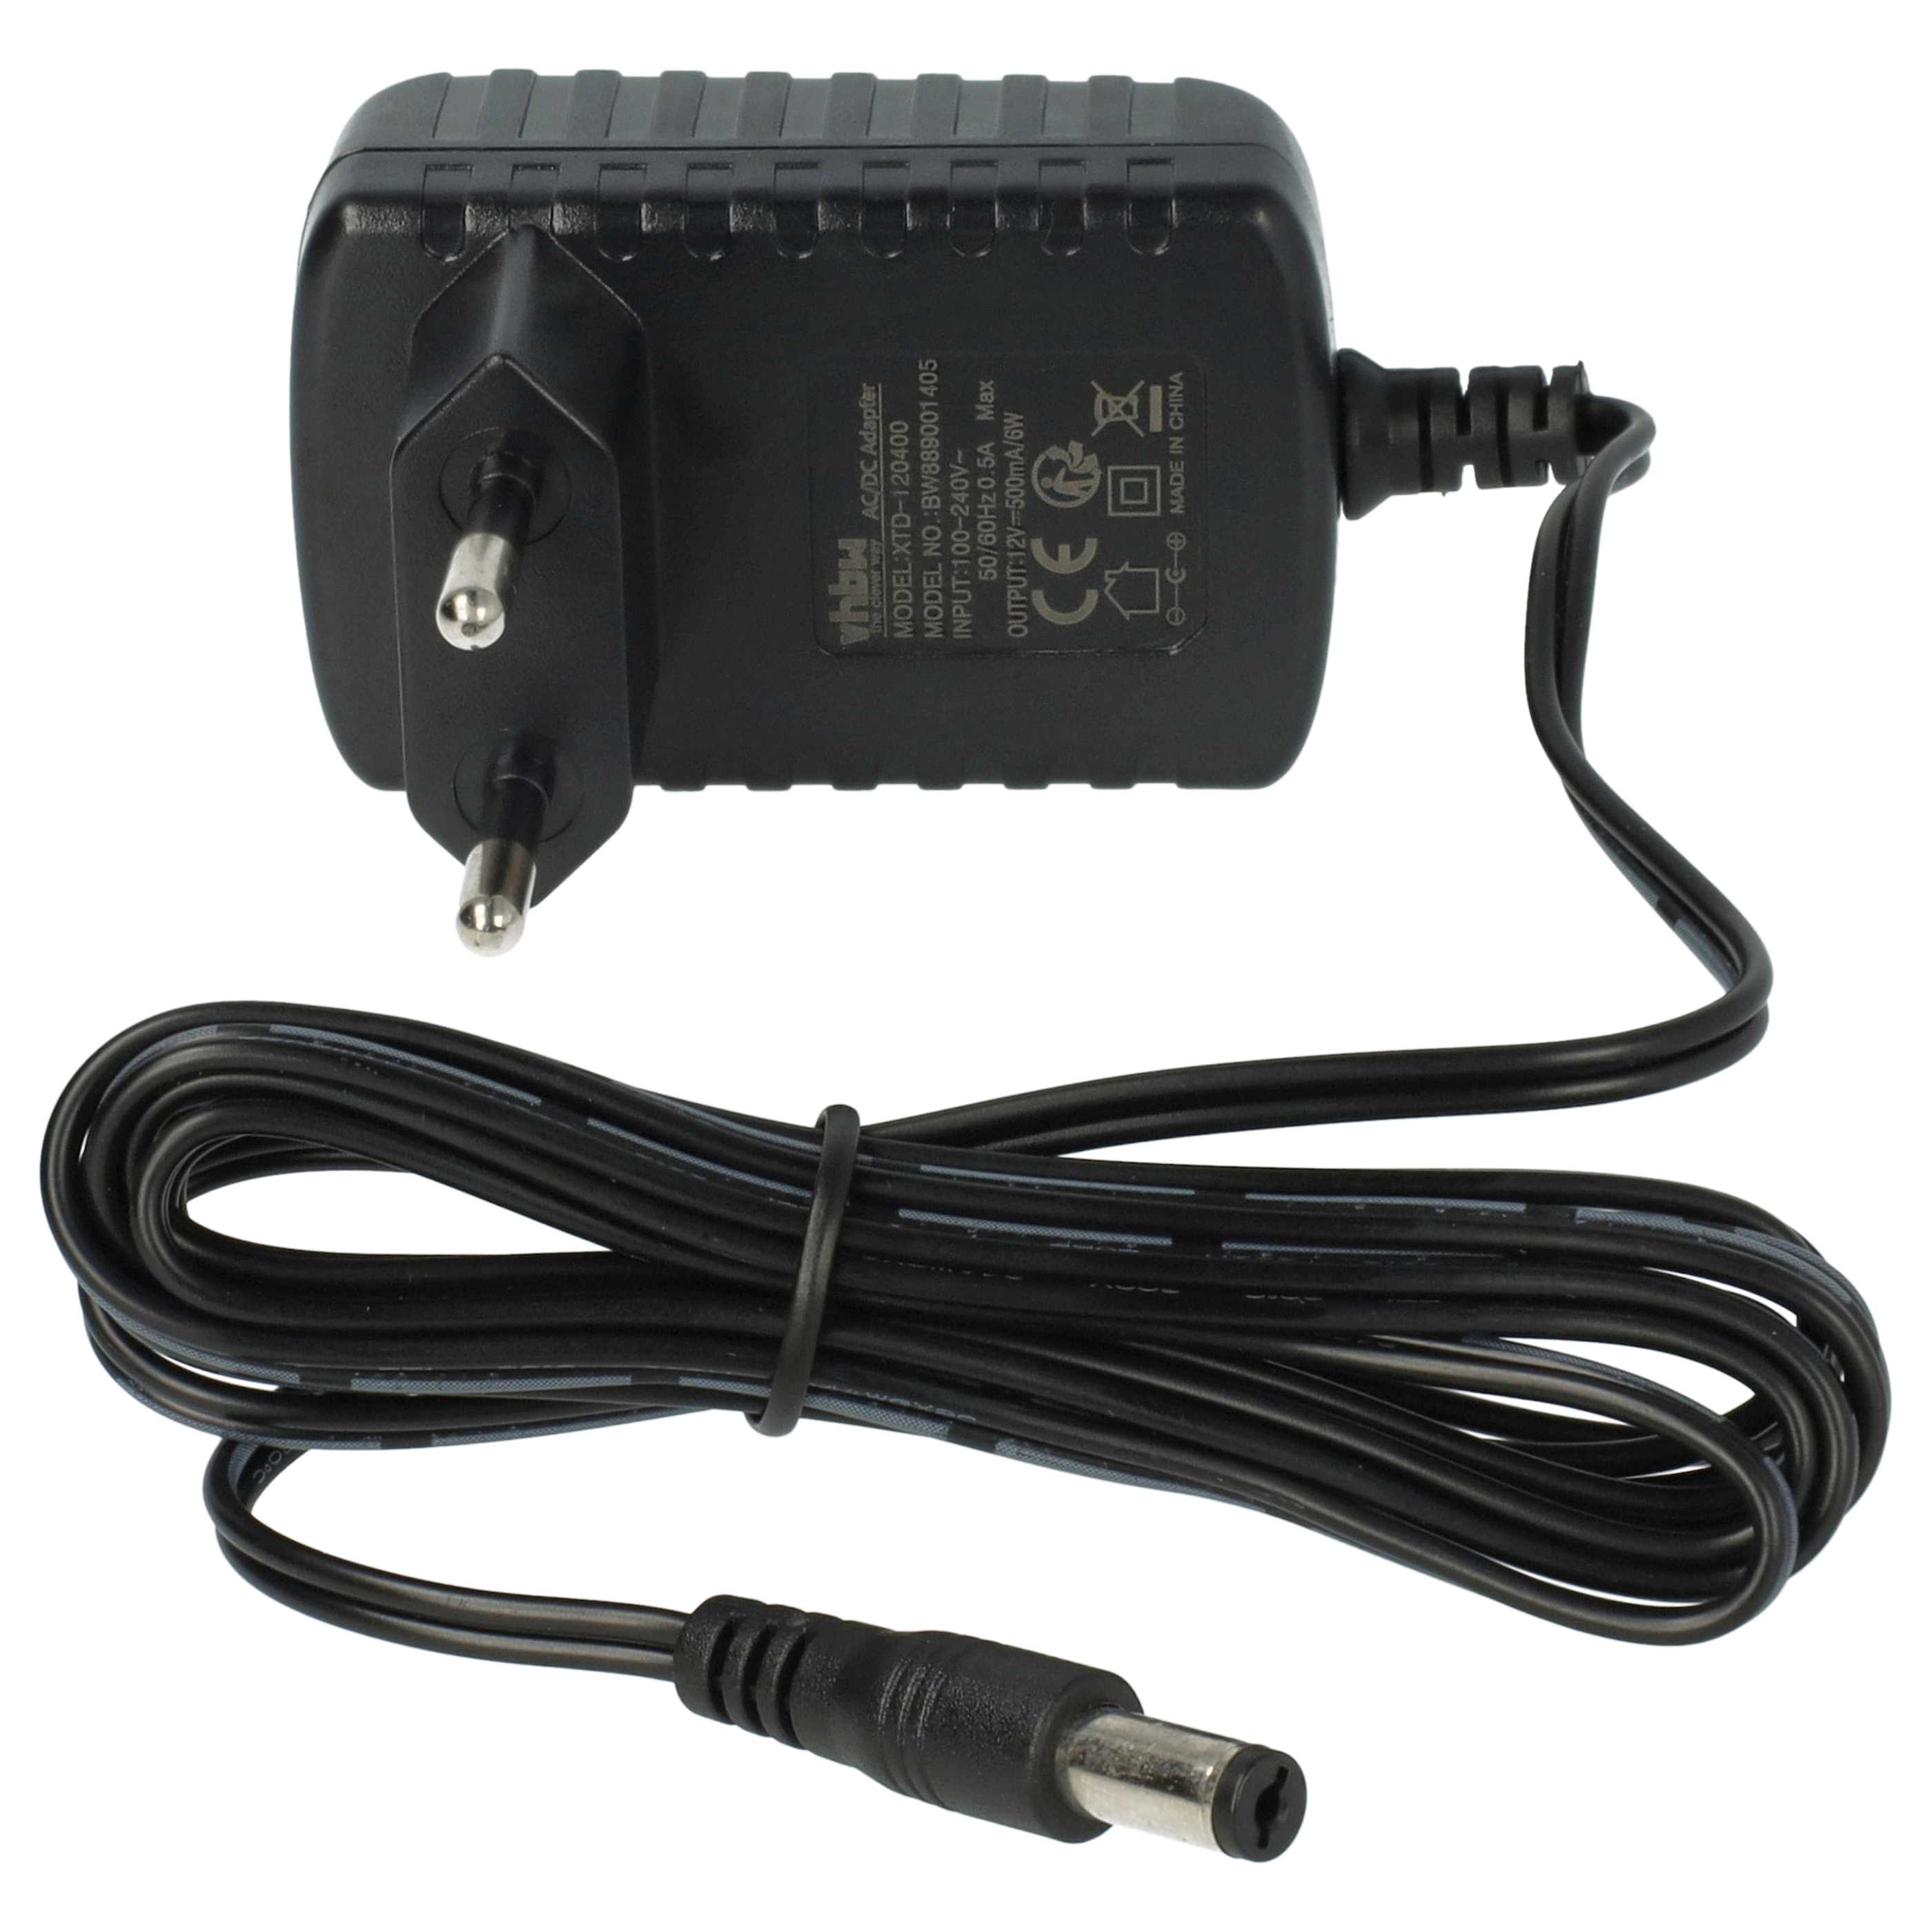 Mains Power Adapter replaces Sennheiser 508899, NT 12-5 CW+ for Sennheiser Radio